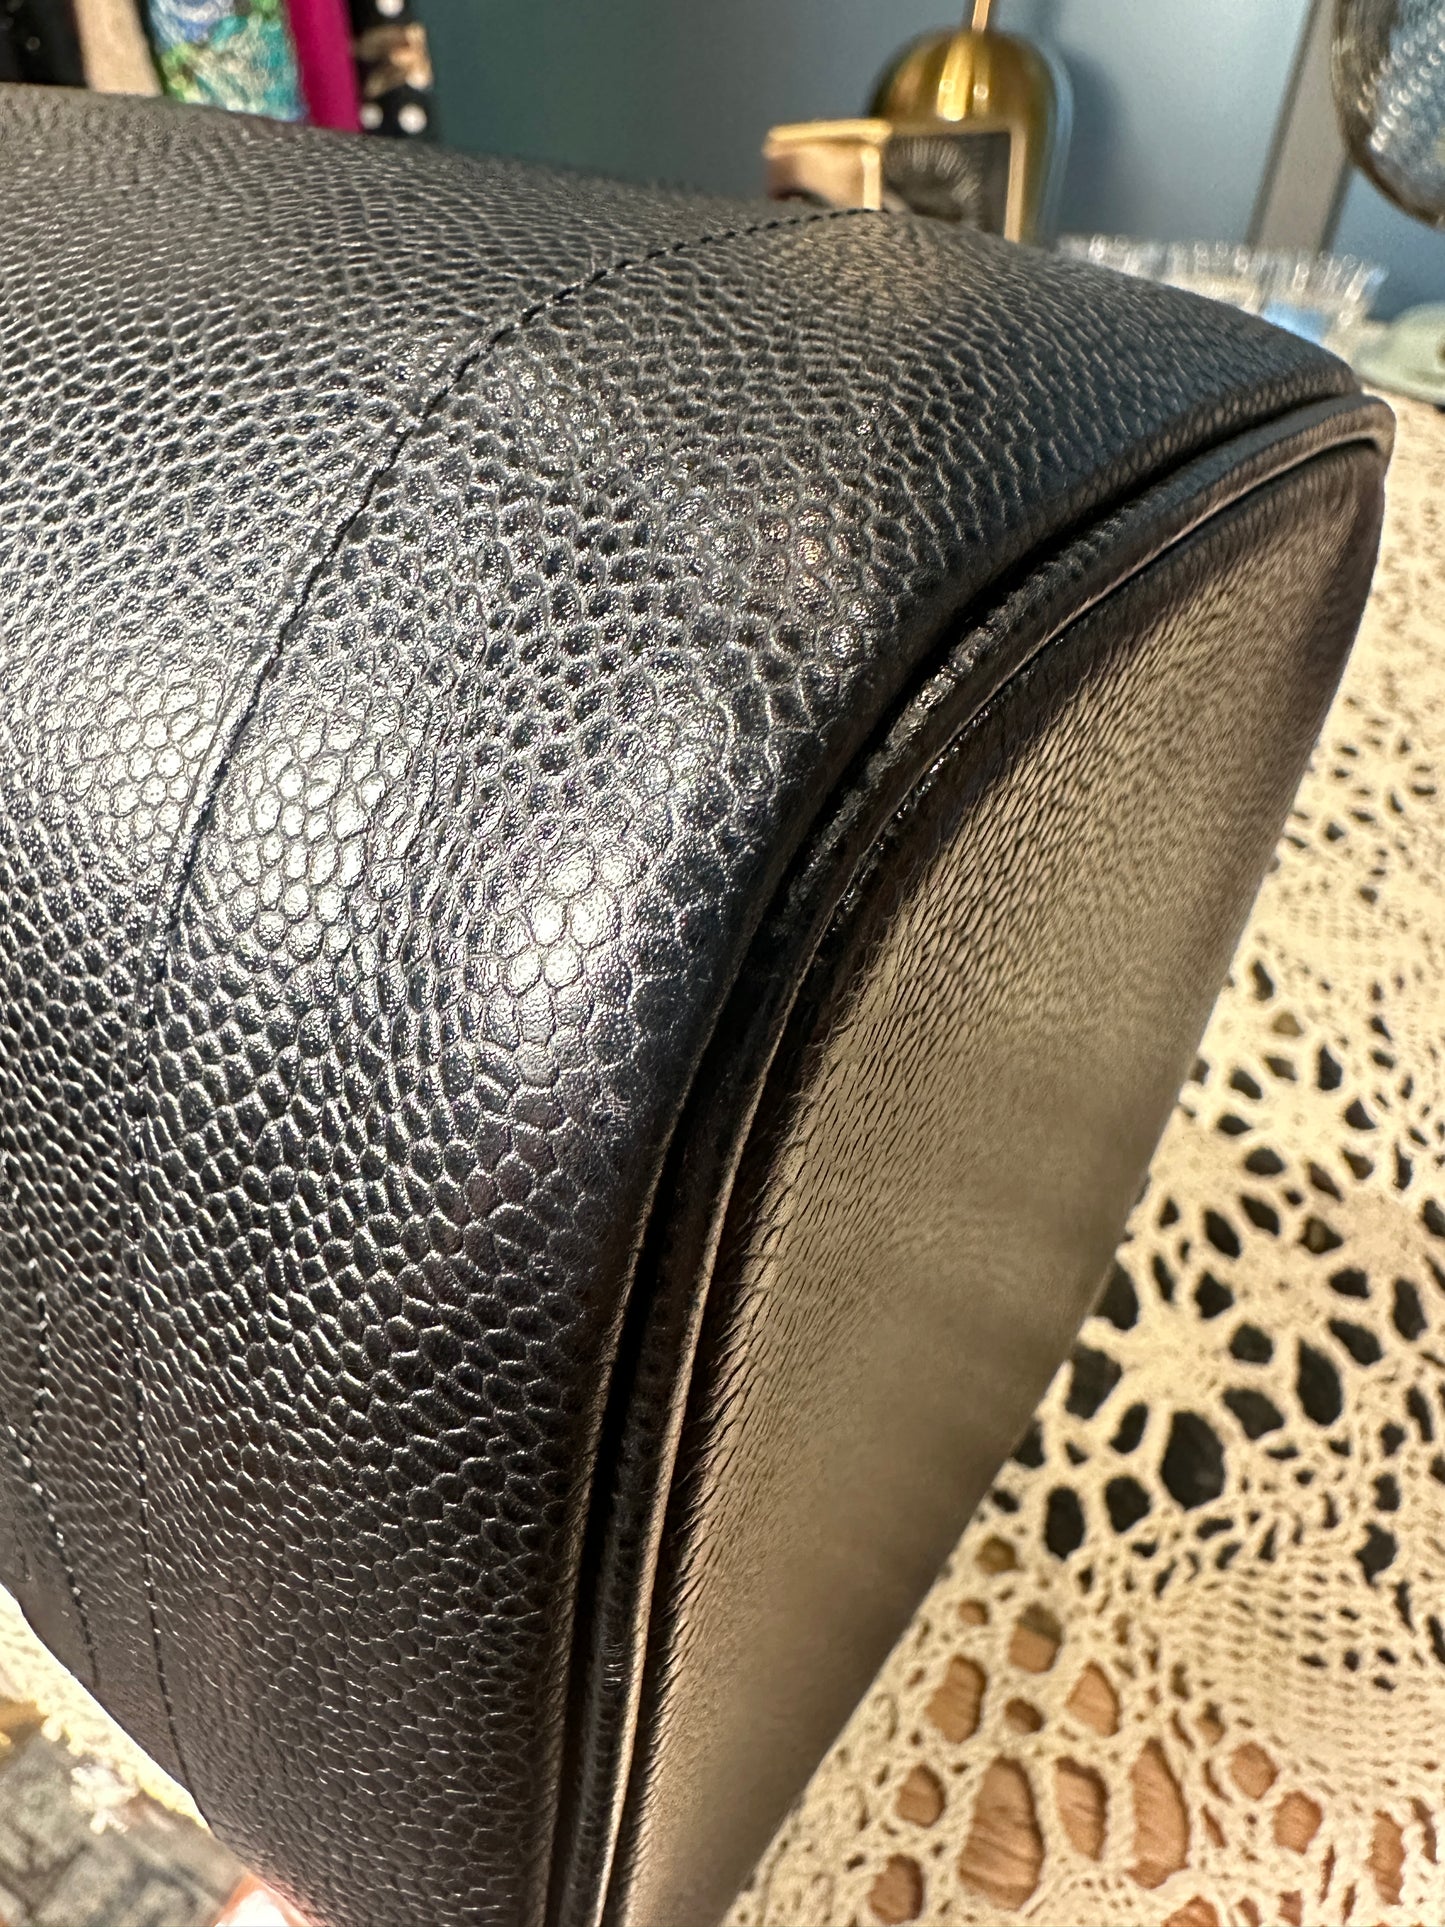 CHANEL VINTAGE 100% Authentic Genuine Leather Makeup Vanity Case Bag, Series 6, 2000-2002, Black, , Good Condition